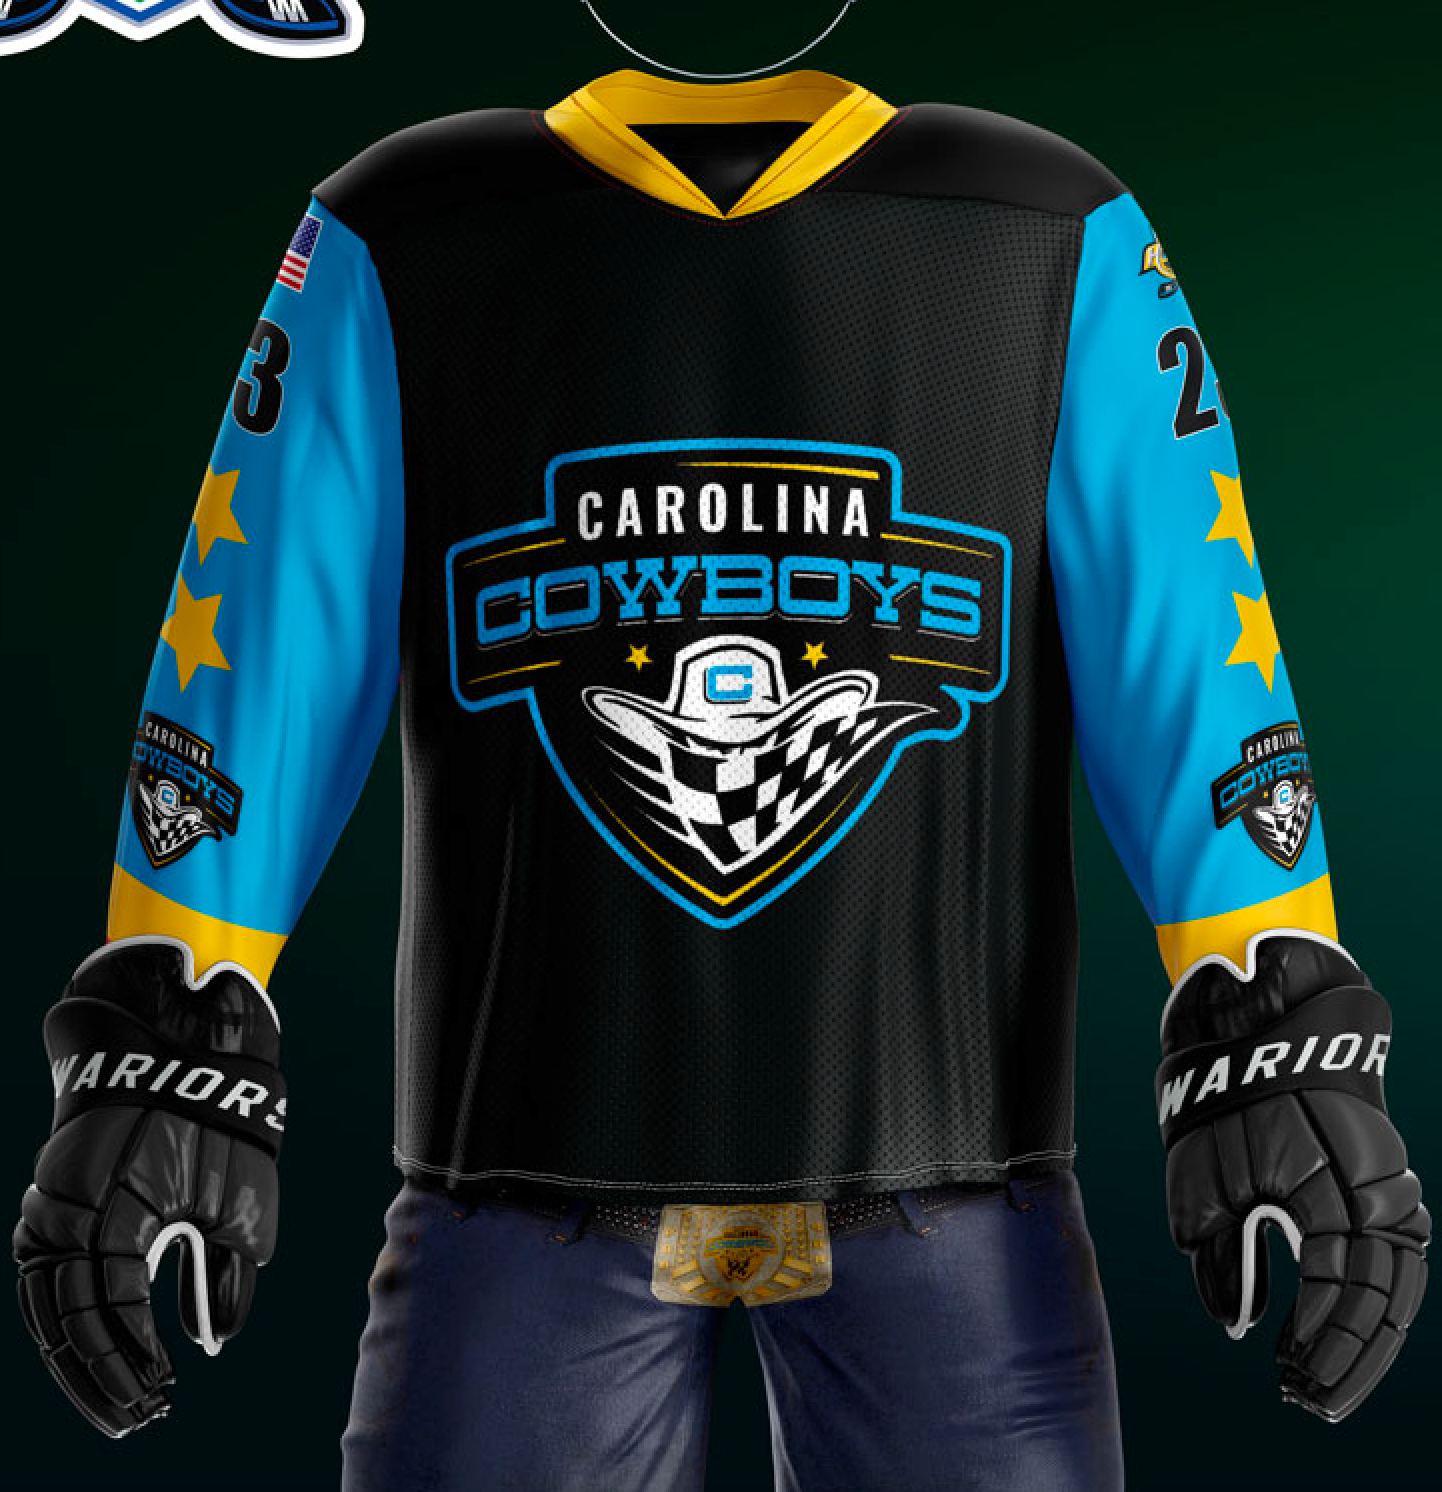 Carolina Cowboys Jersey or Hoodie - Customizable Name/Number